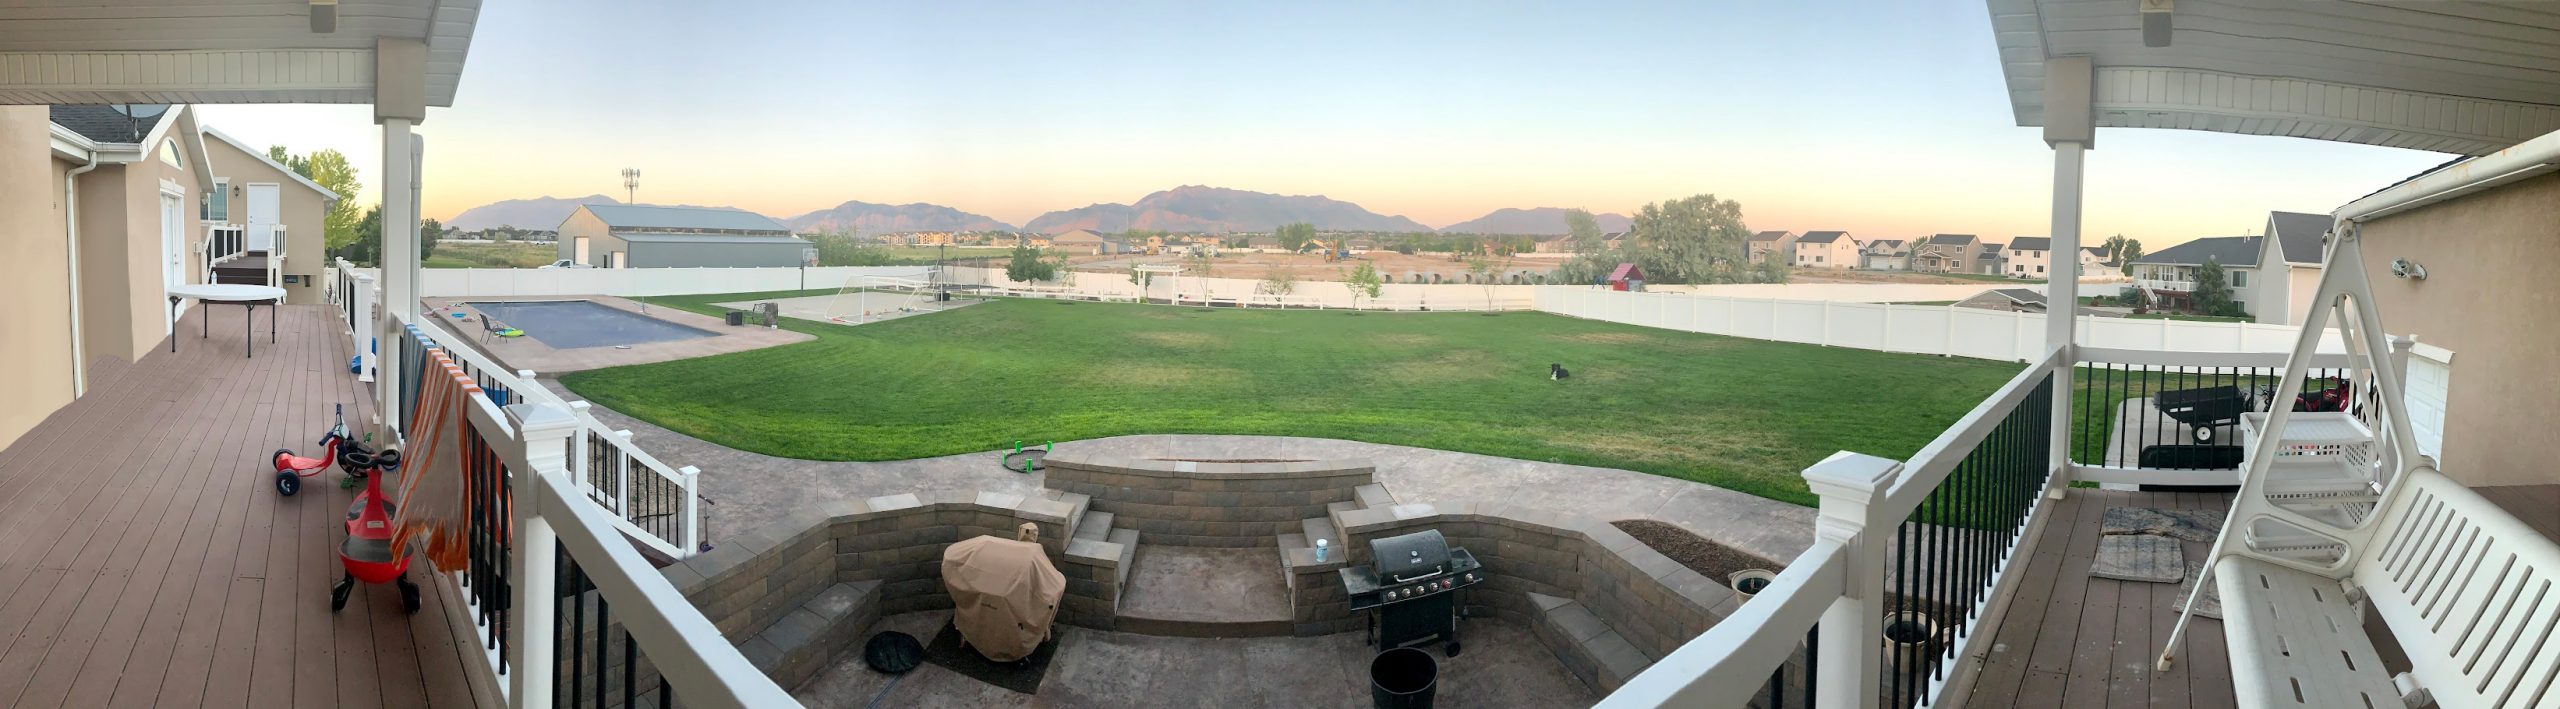 backyard-panorama